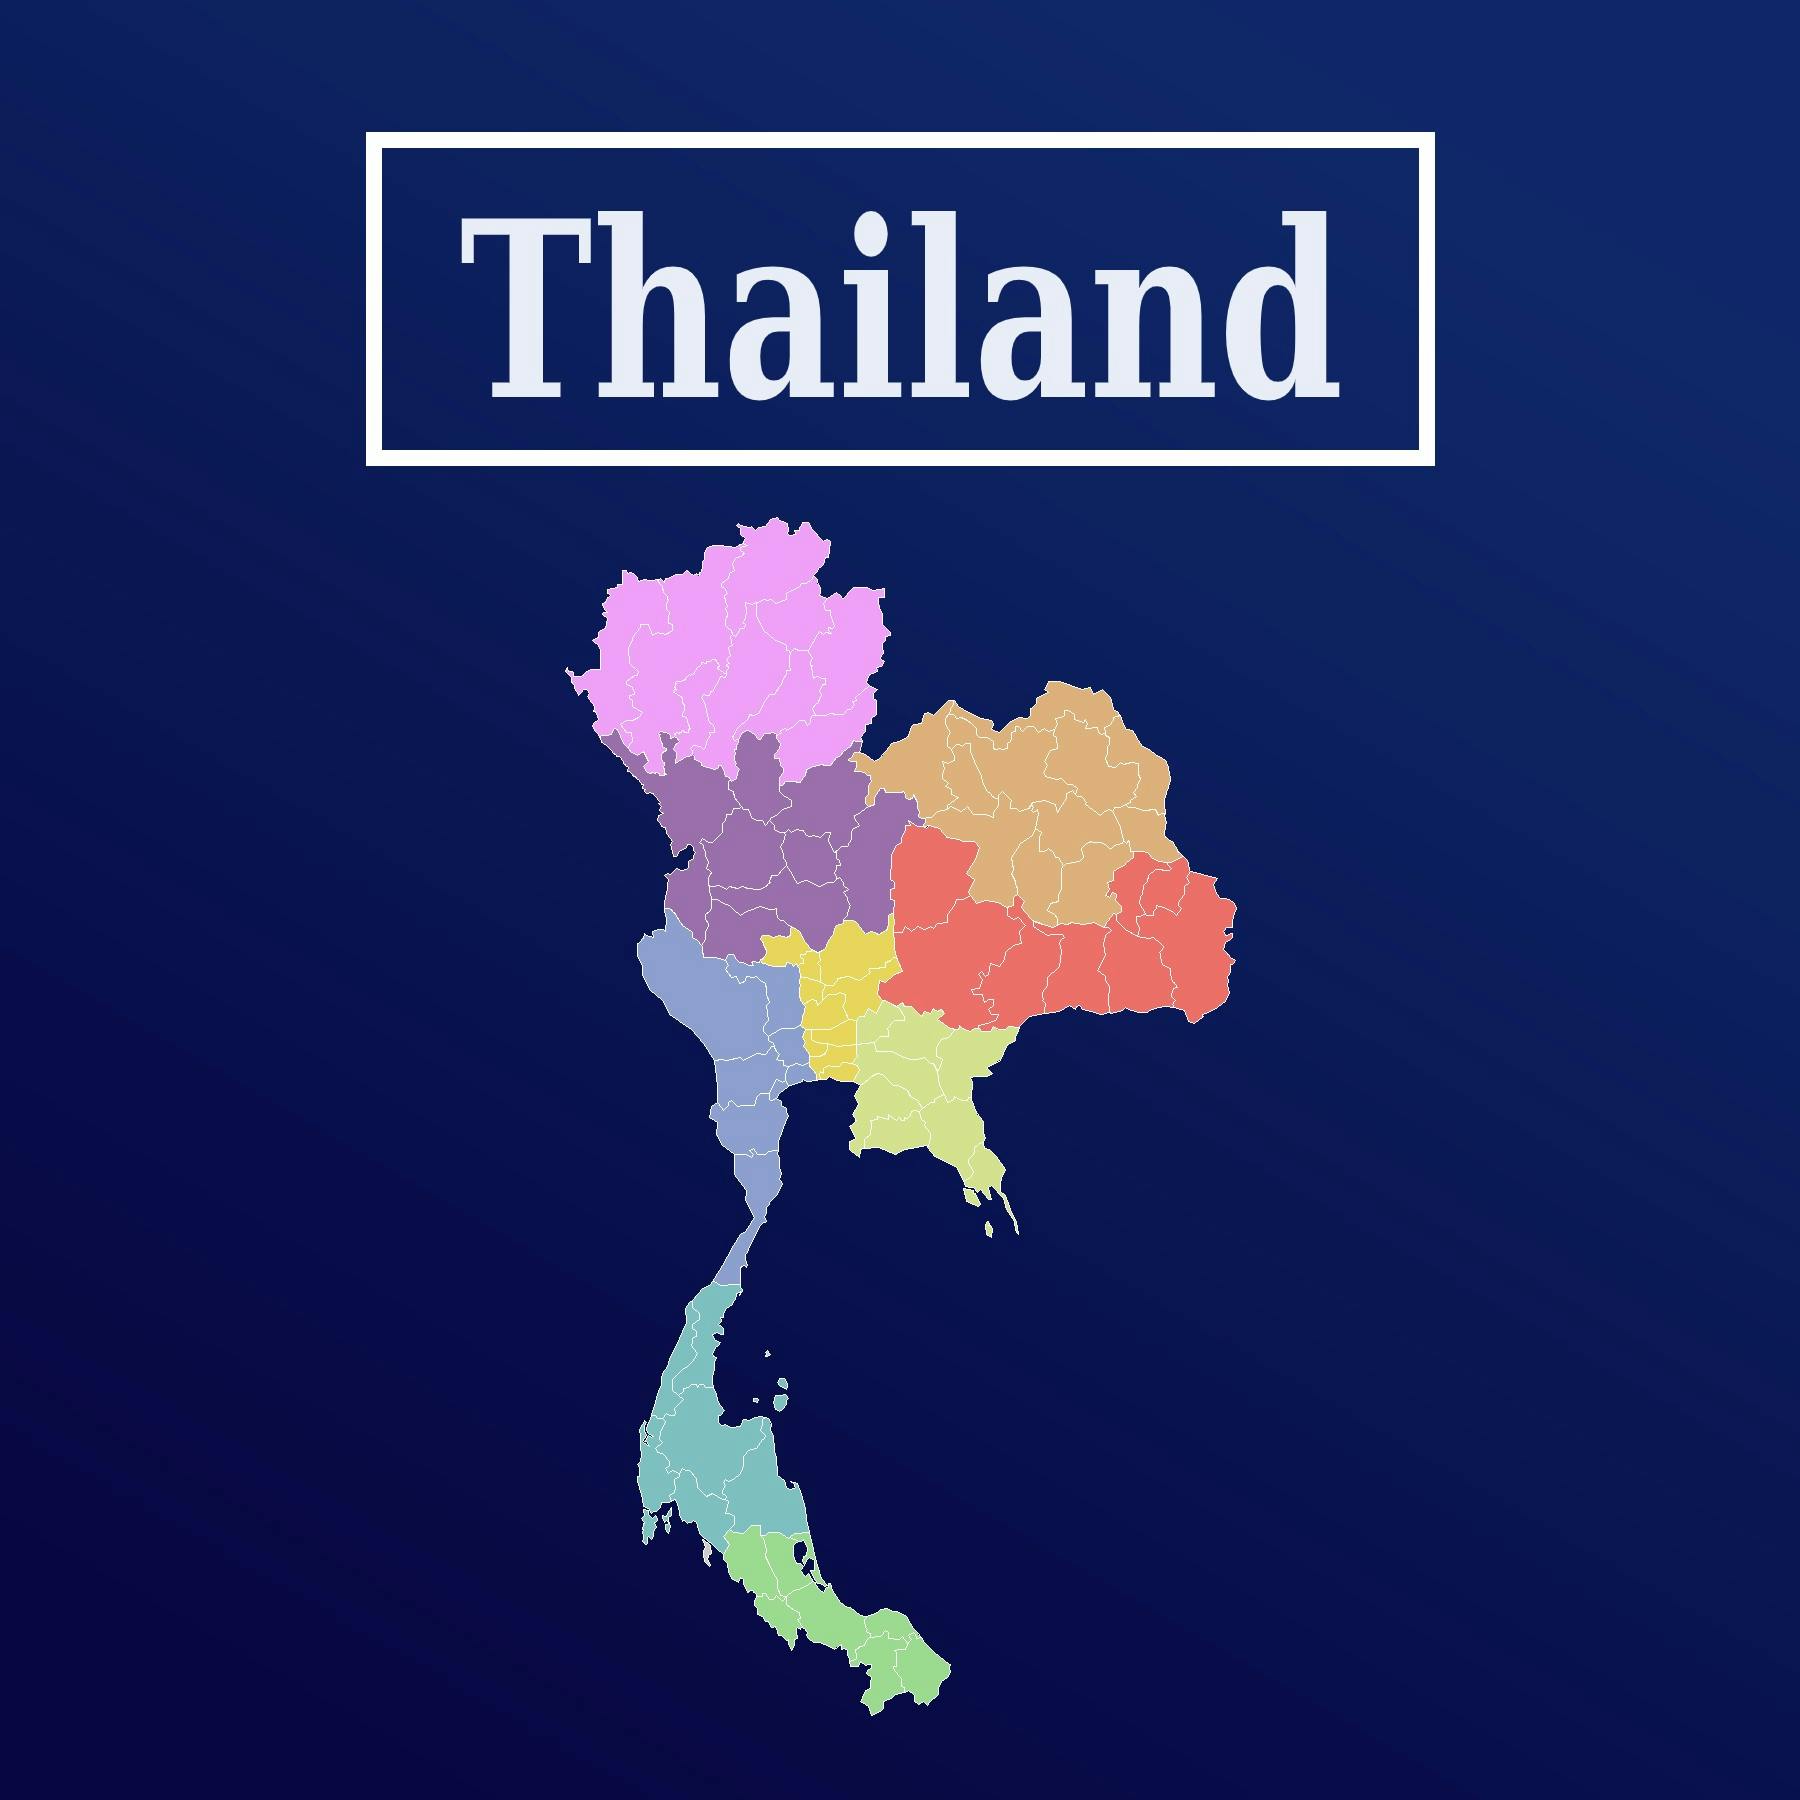 Episode 17: Claudio Sopranzetti on Thai Migration and Movements